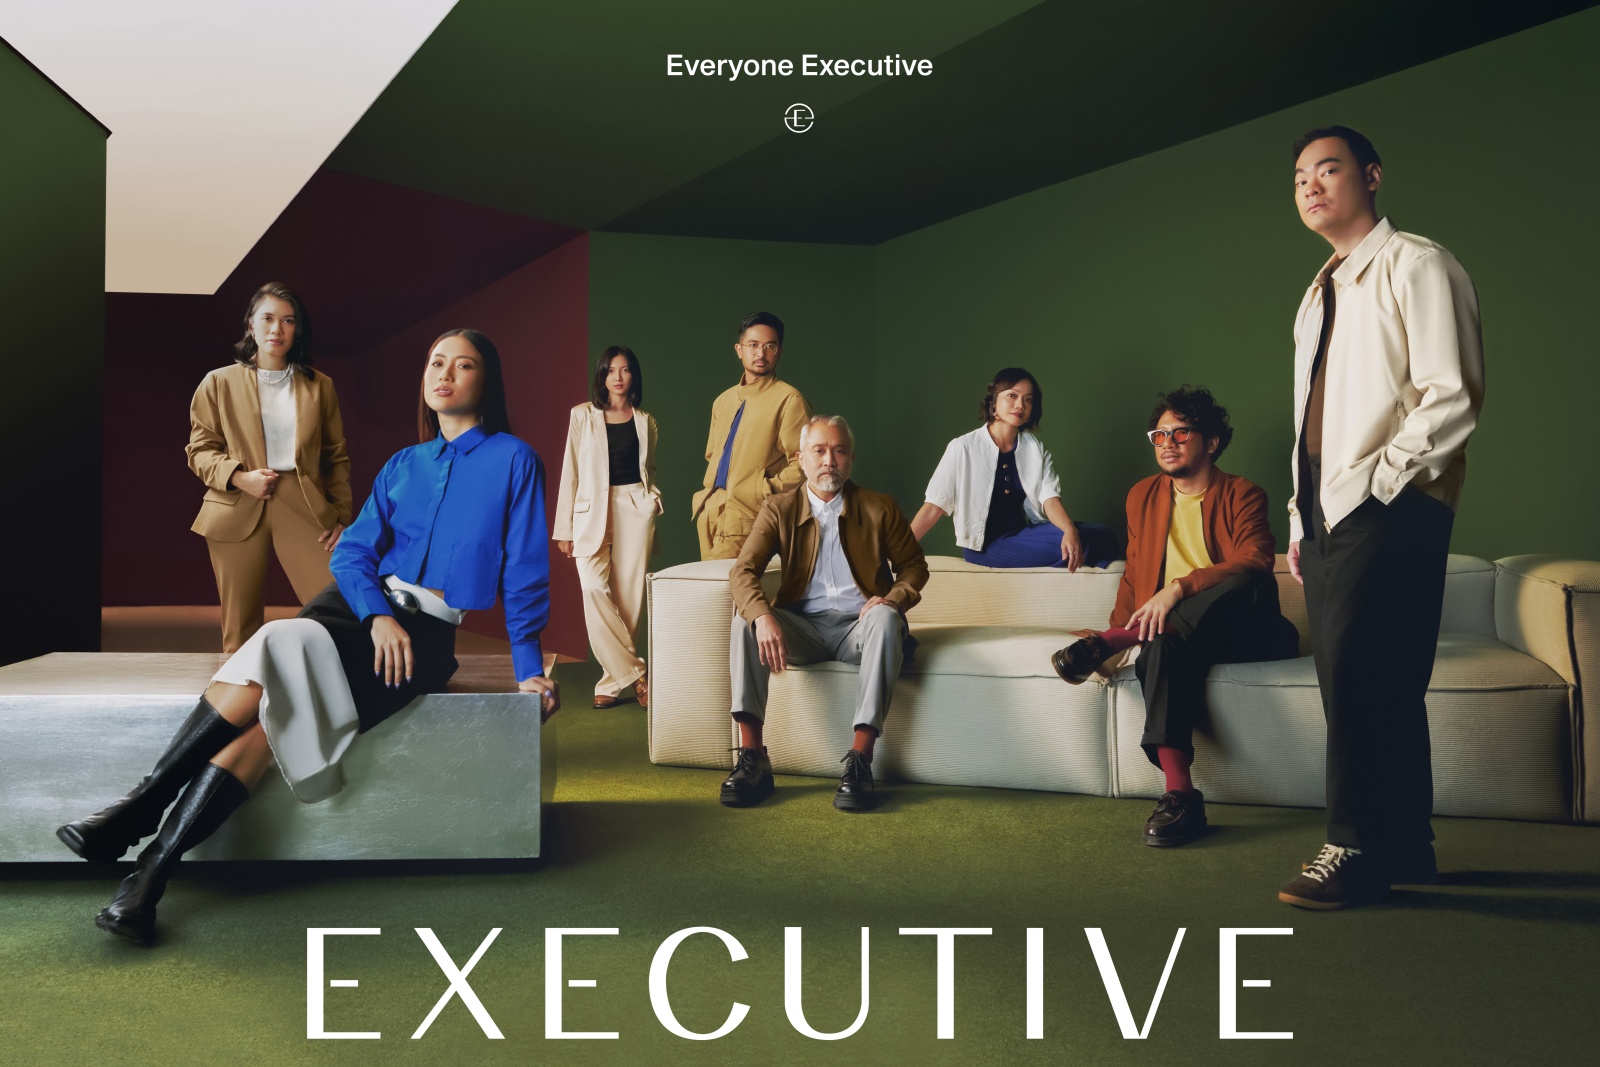 Lepas Image ‘Baju Kantoran’, Executive Gandeng 8 Sosok Ini dalam ‘Everyone Executive’